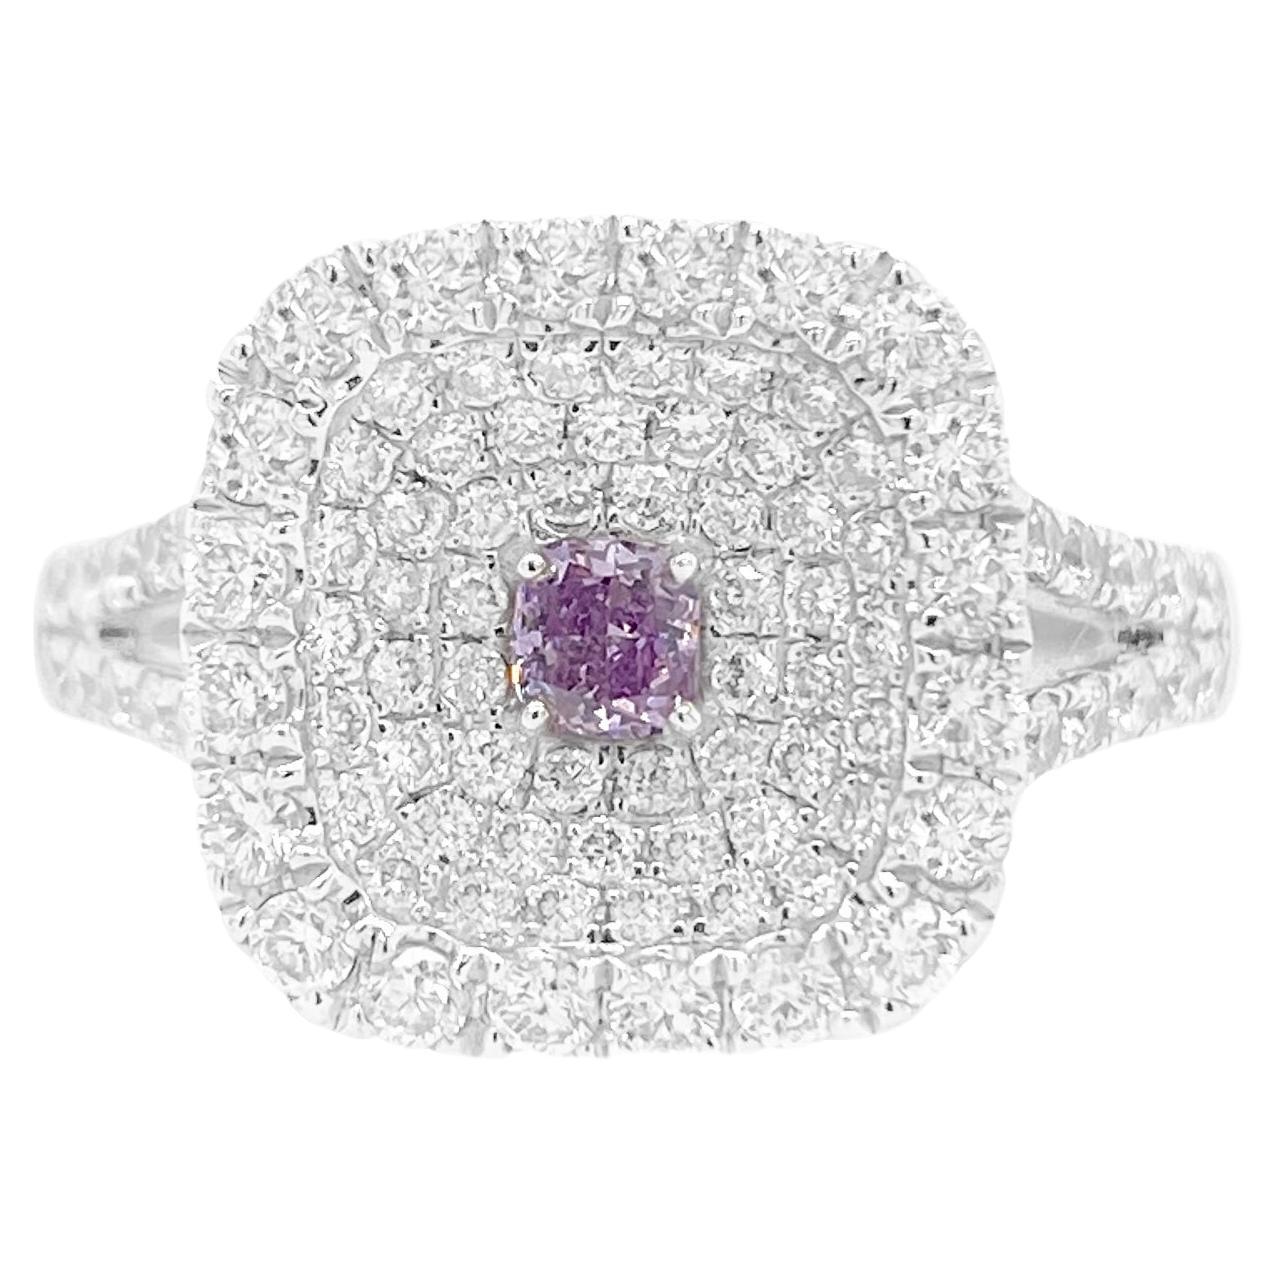 Cocktail Ring with a Pinkish Purple Diamond and White diamonds